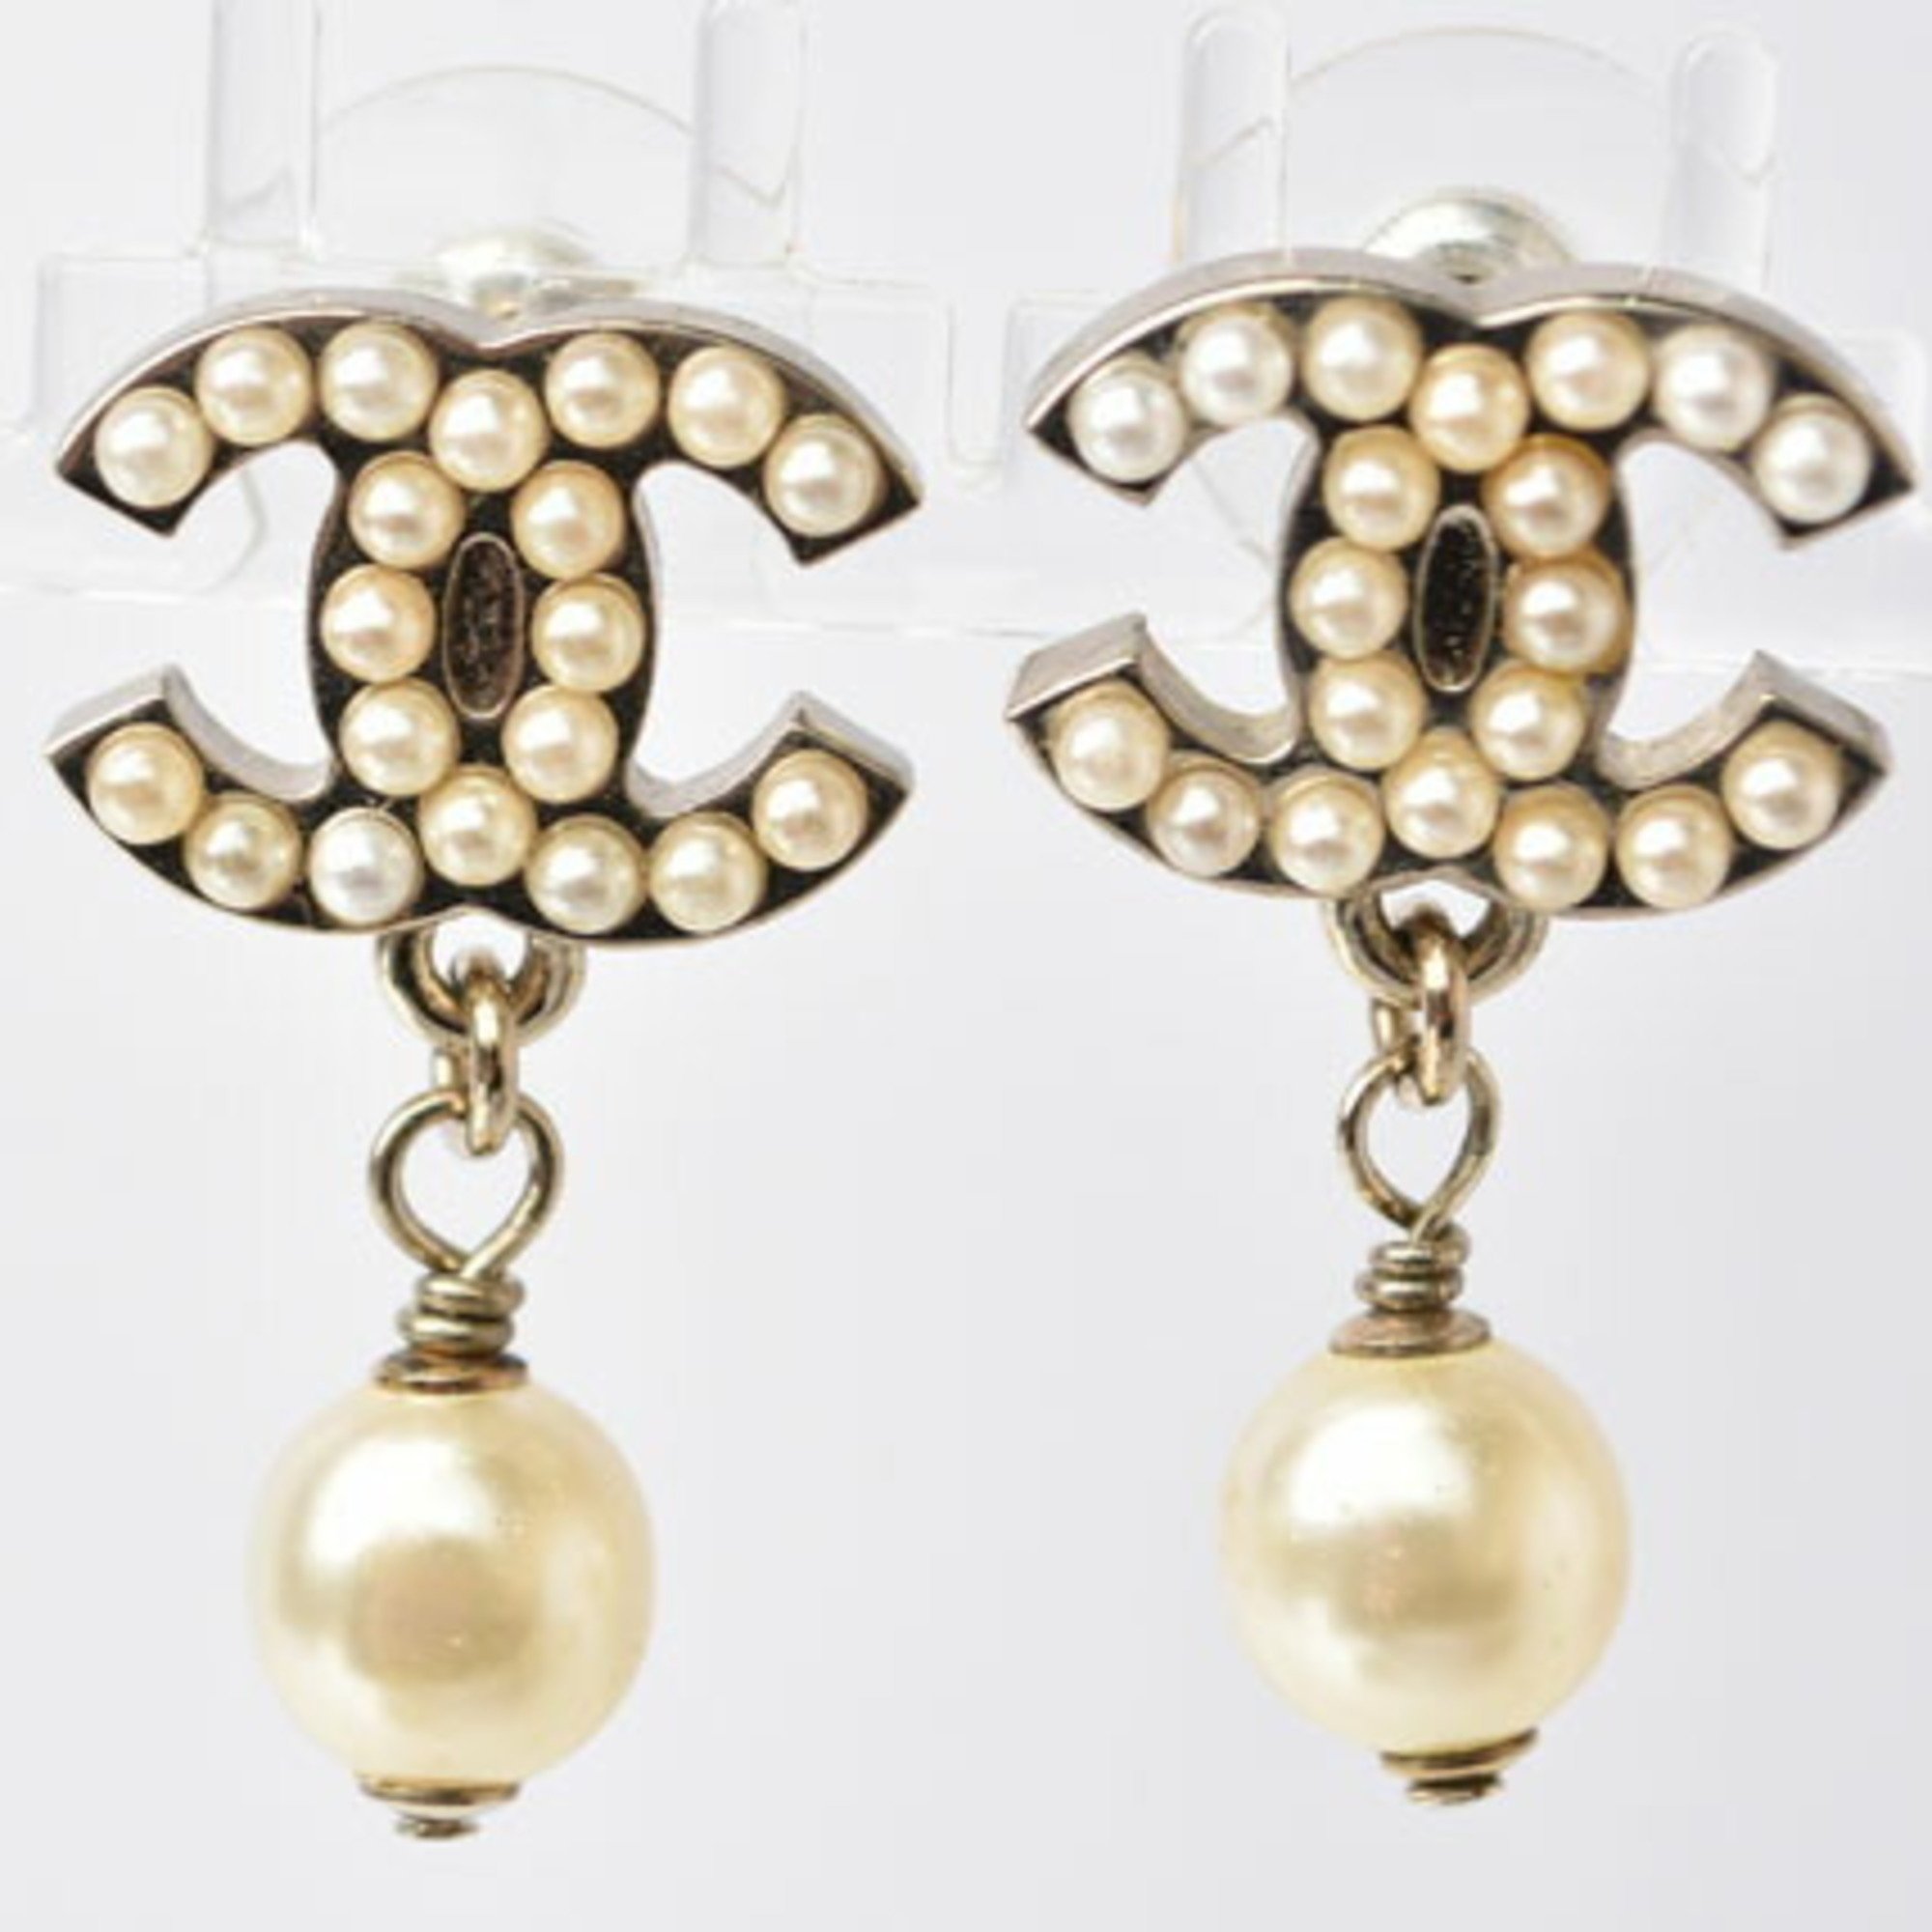 CHANEL earrings CC motif here mark swing pearl gold white